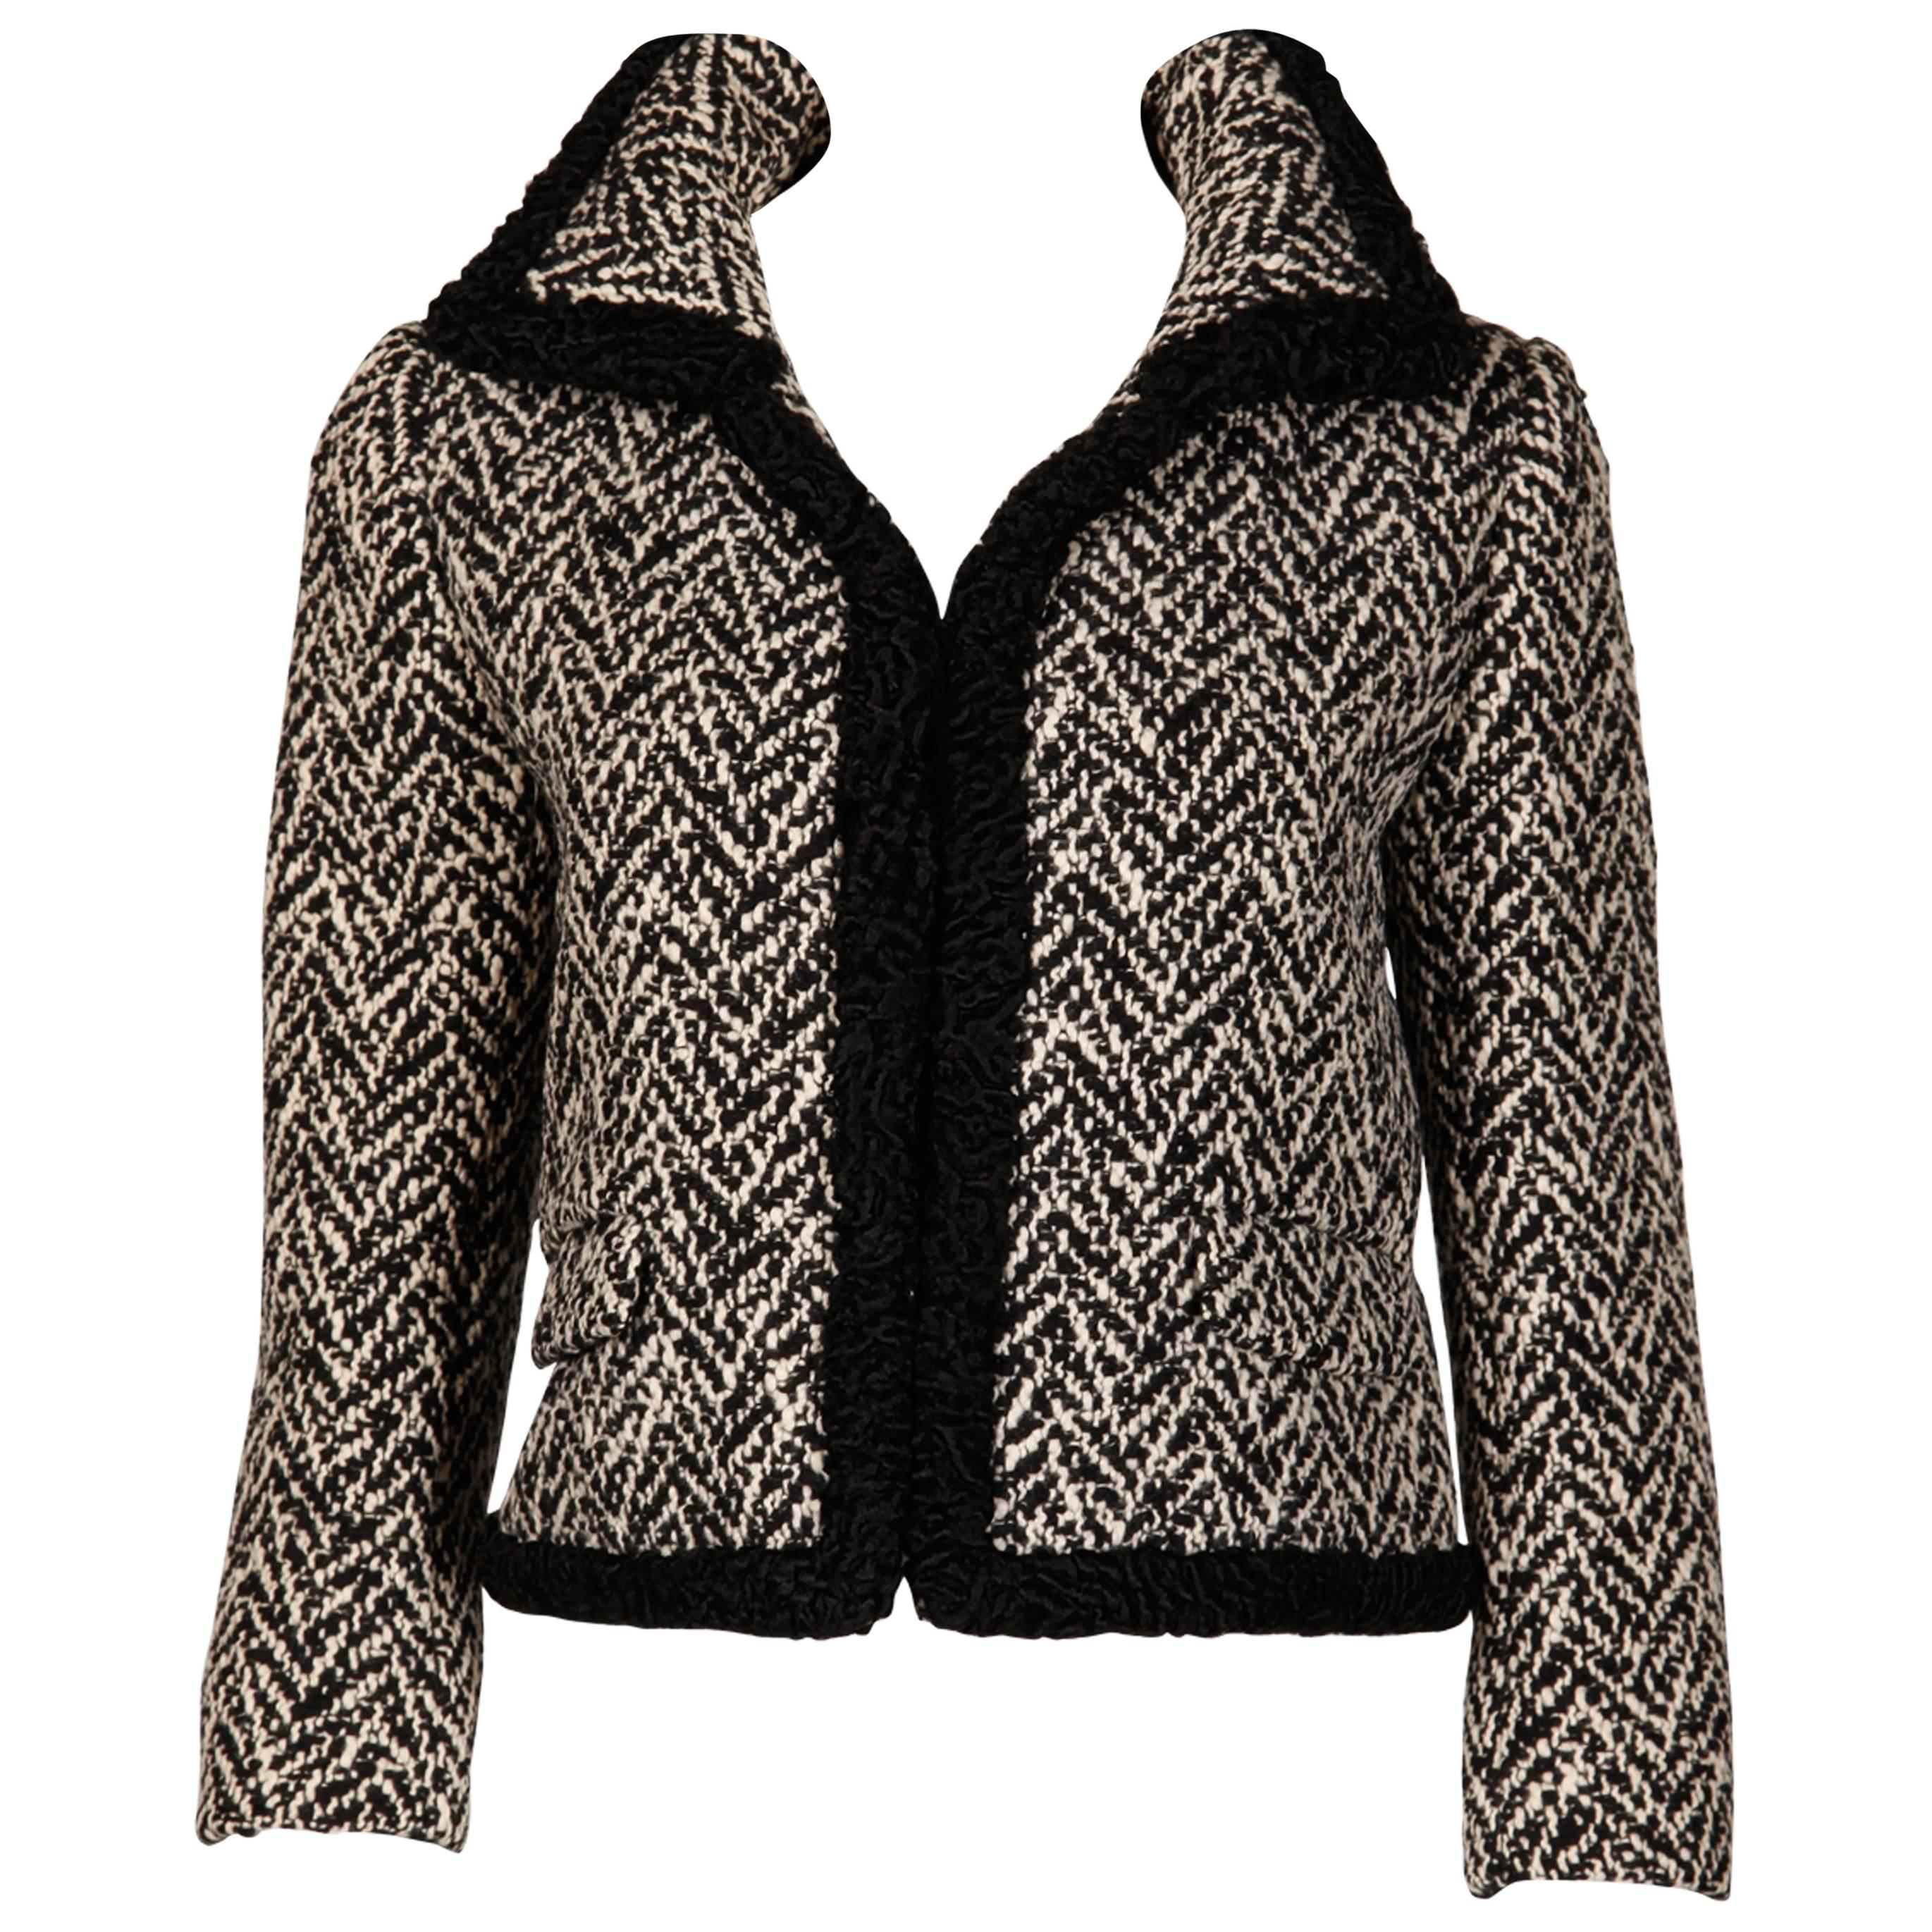 Ben Zuckerman 1960s Vintage Wool Tweed Jacket with Persian Lamb Fur Trim For Sale